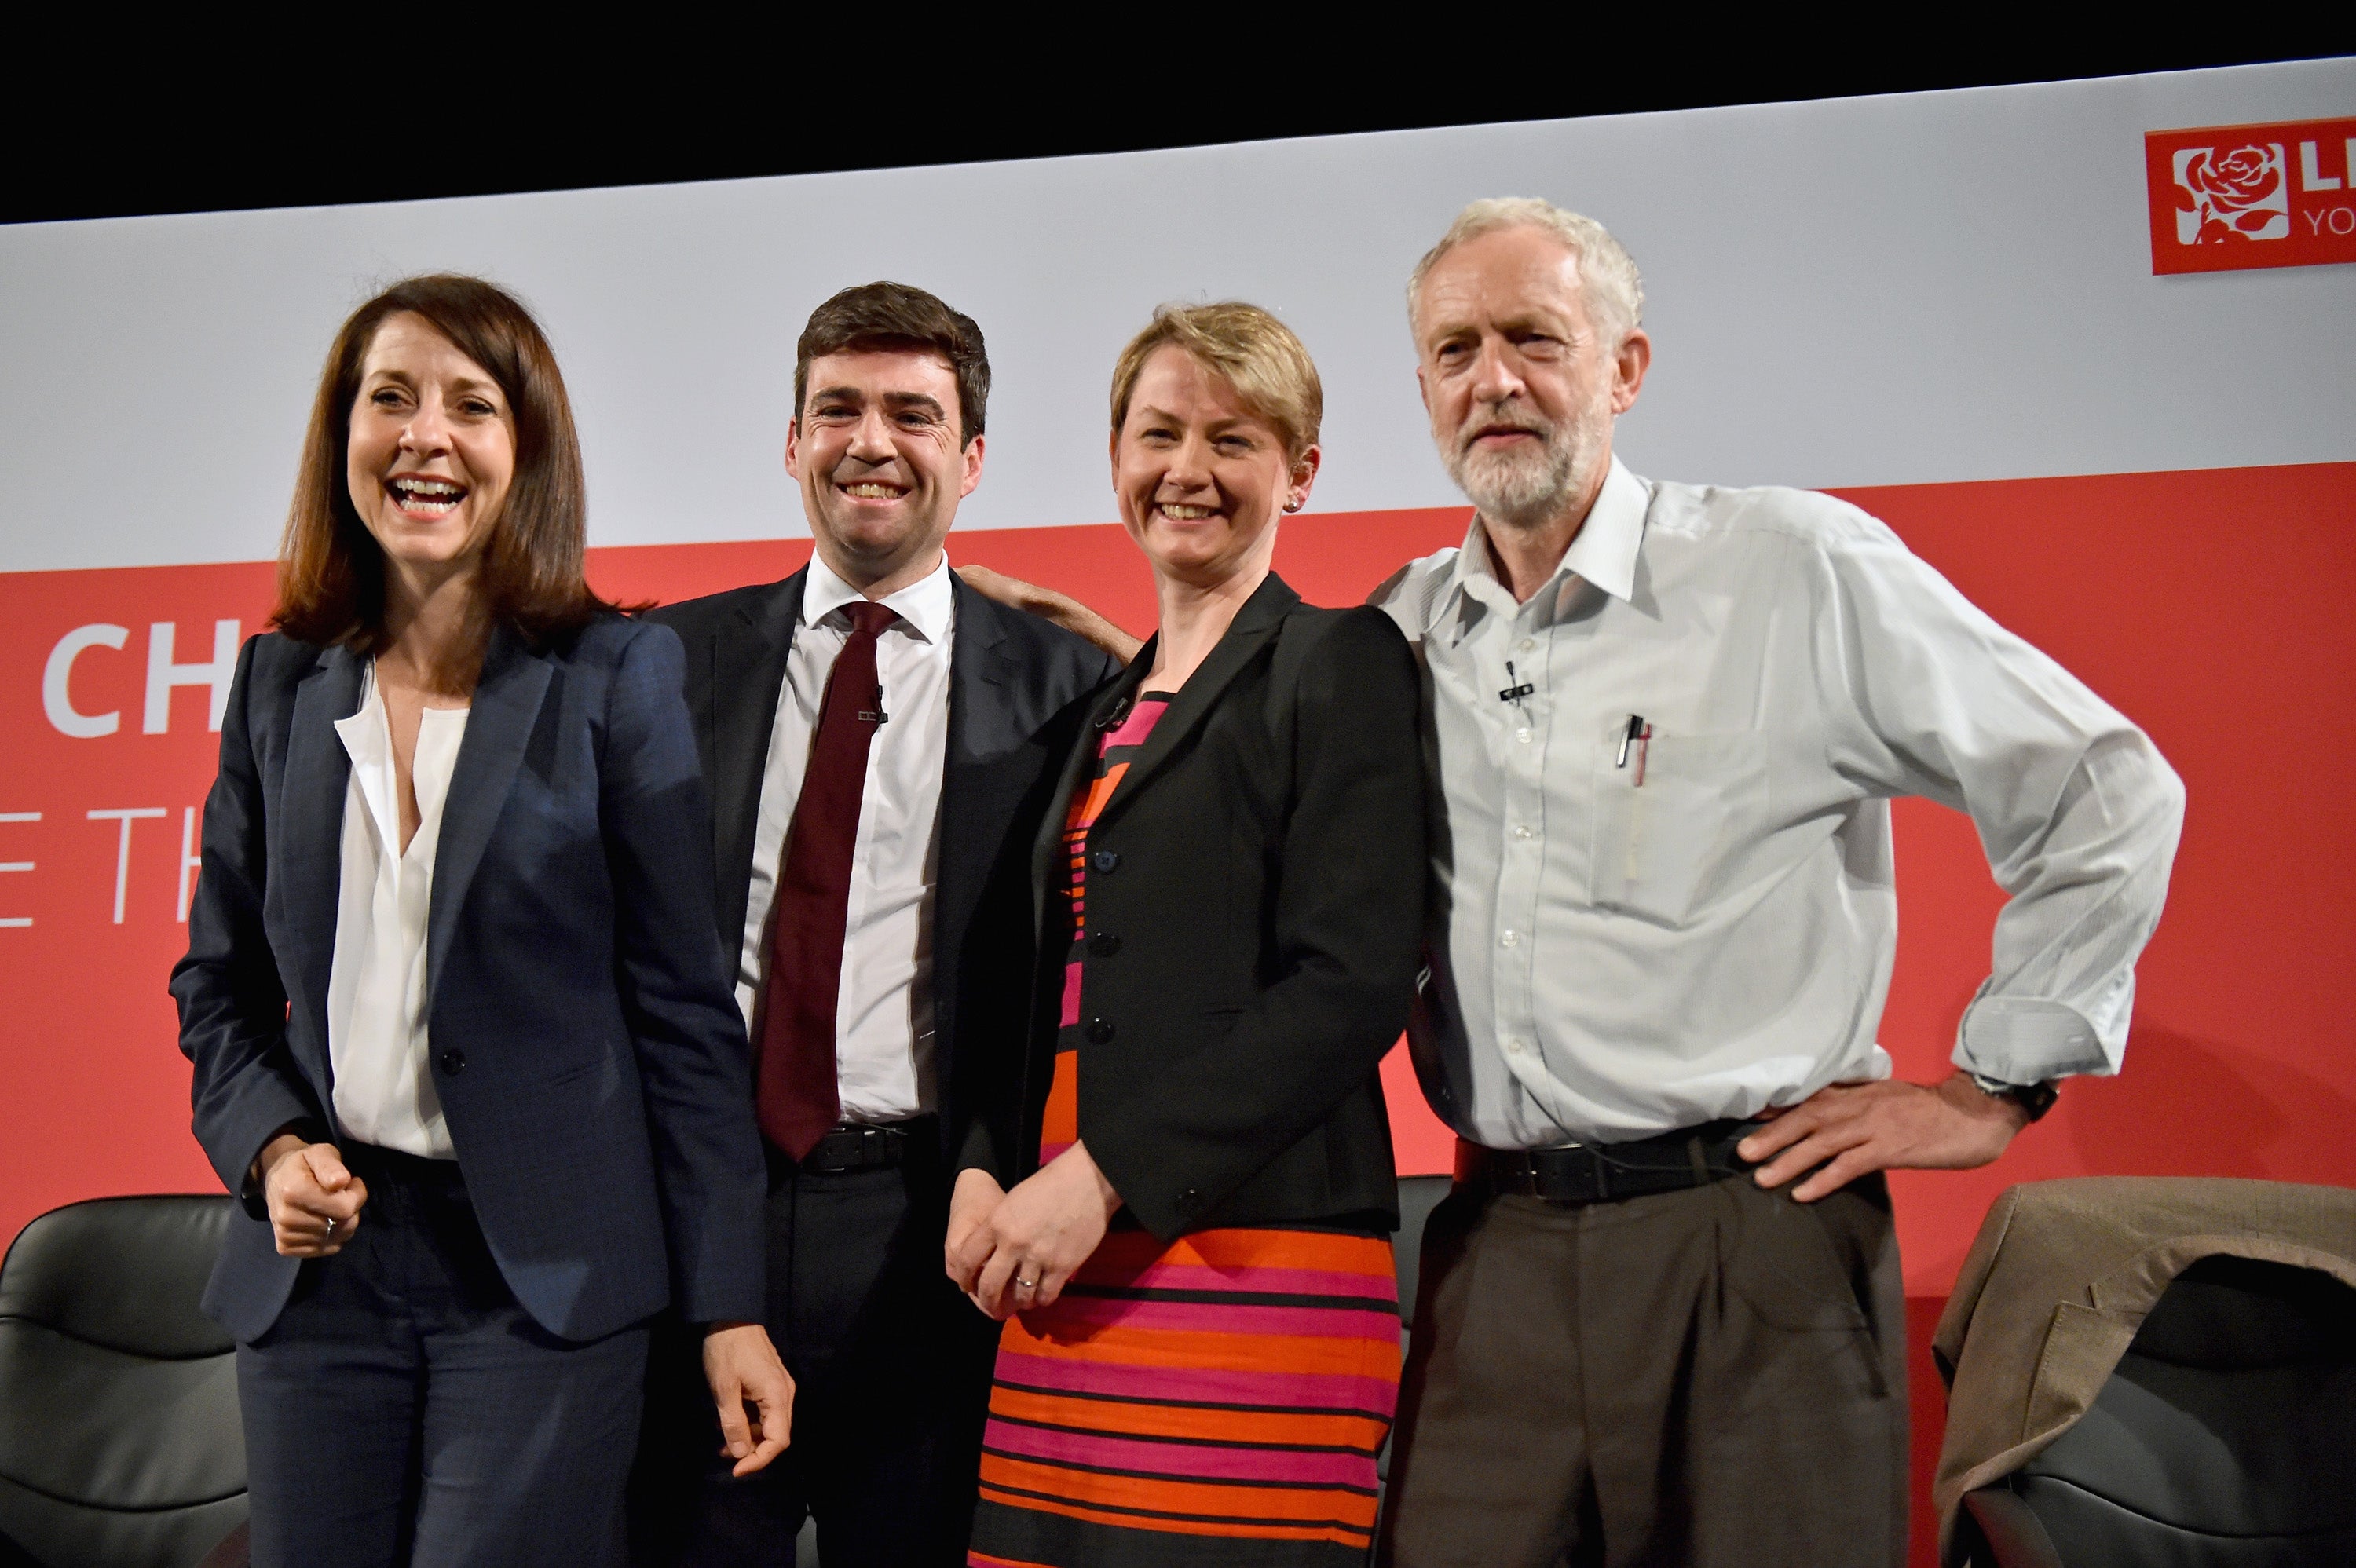 Labour leadership hopefuls: Liz Kendall, Andy Burnham, Yvette Cooper and Jeremy Corbyn